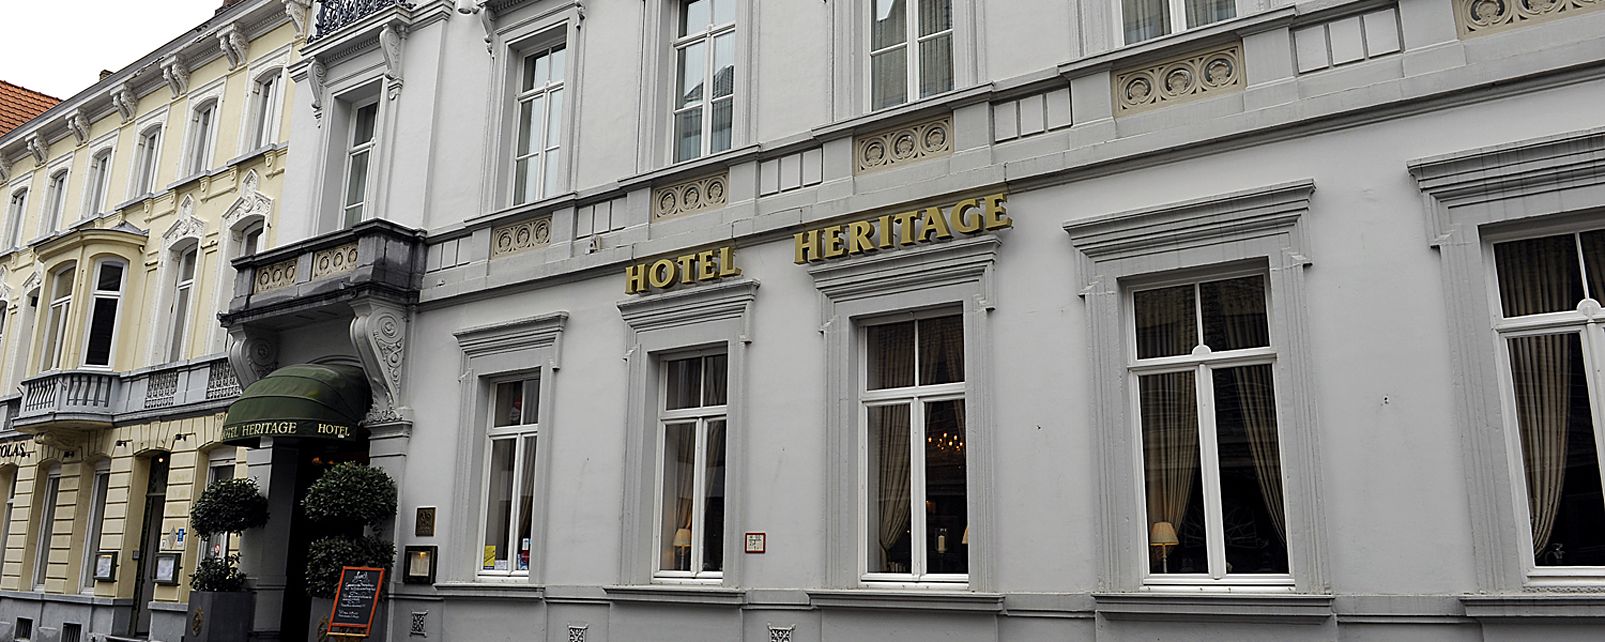 Hôtel Heritage